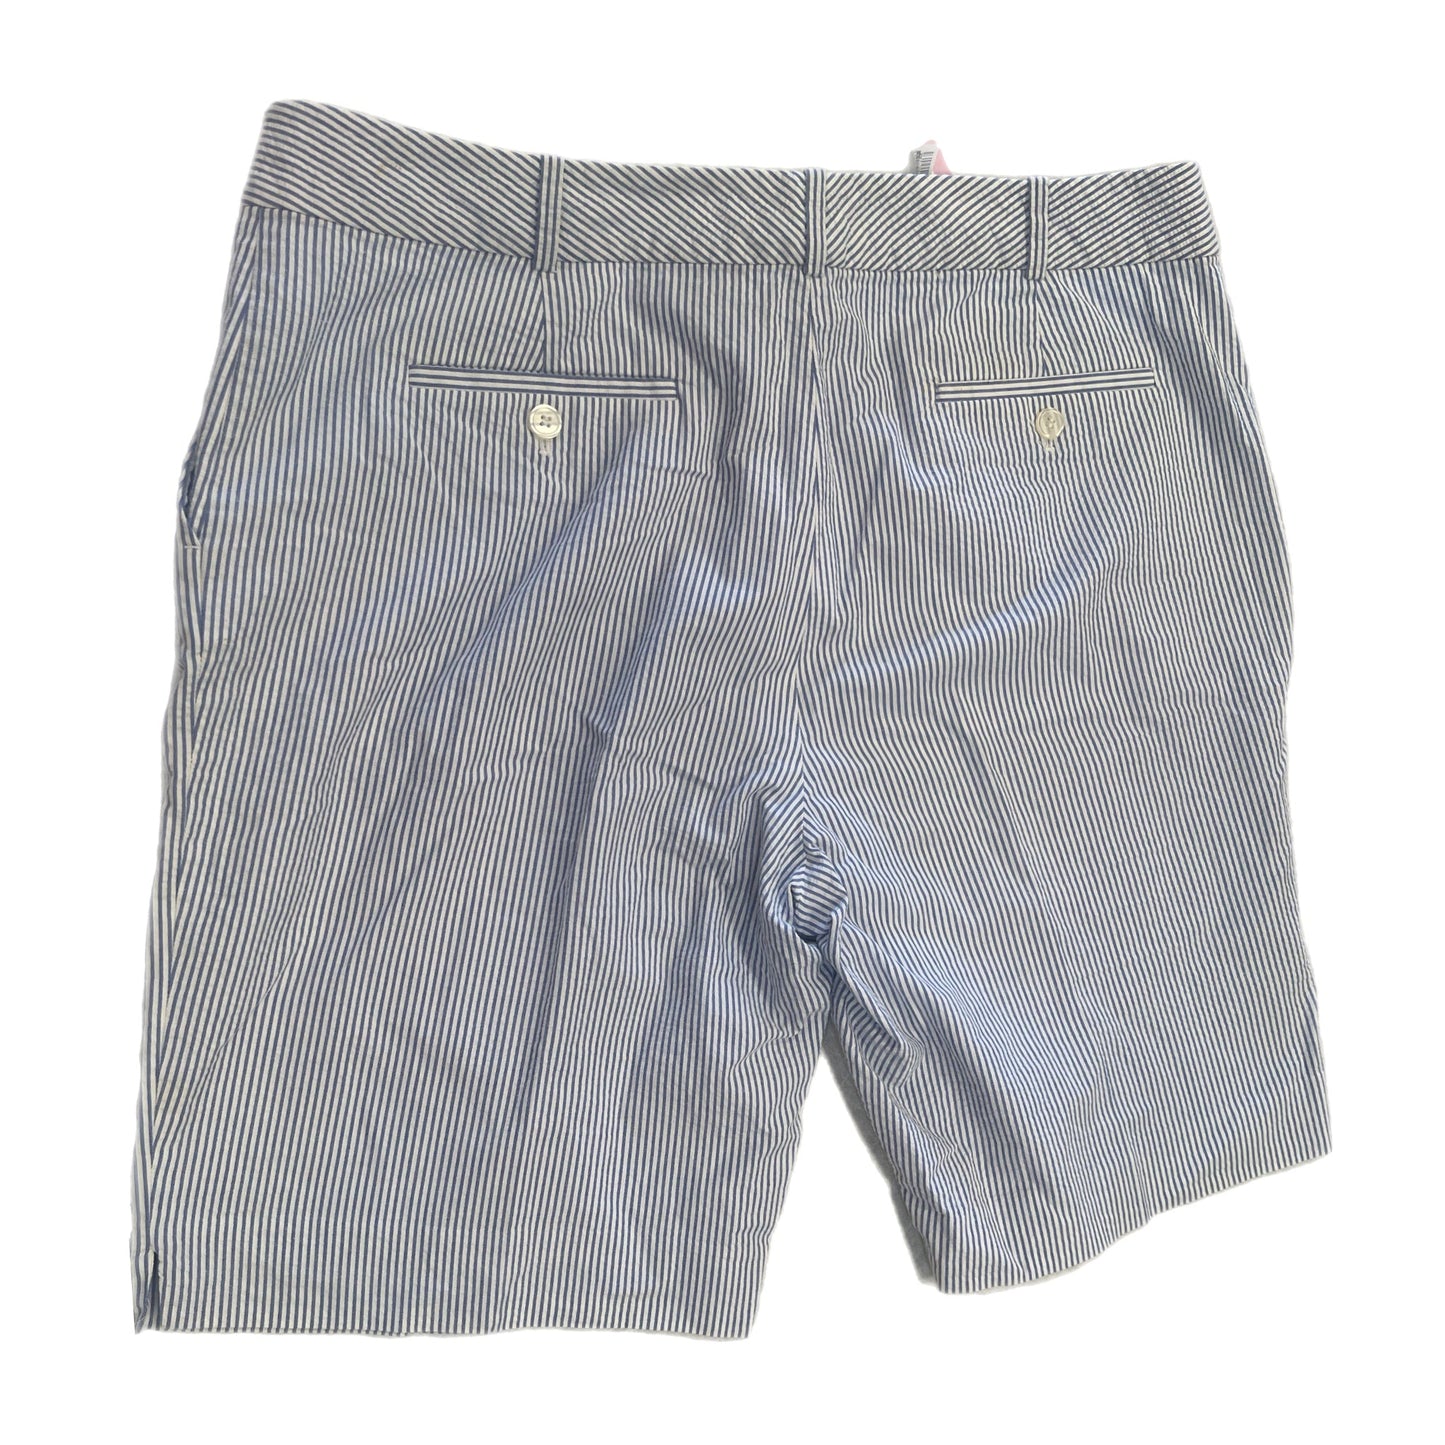 Shorts By Talbots  Size: 16